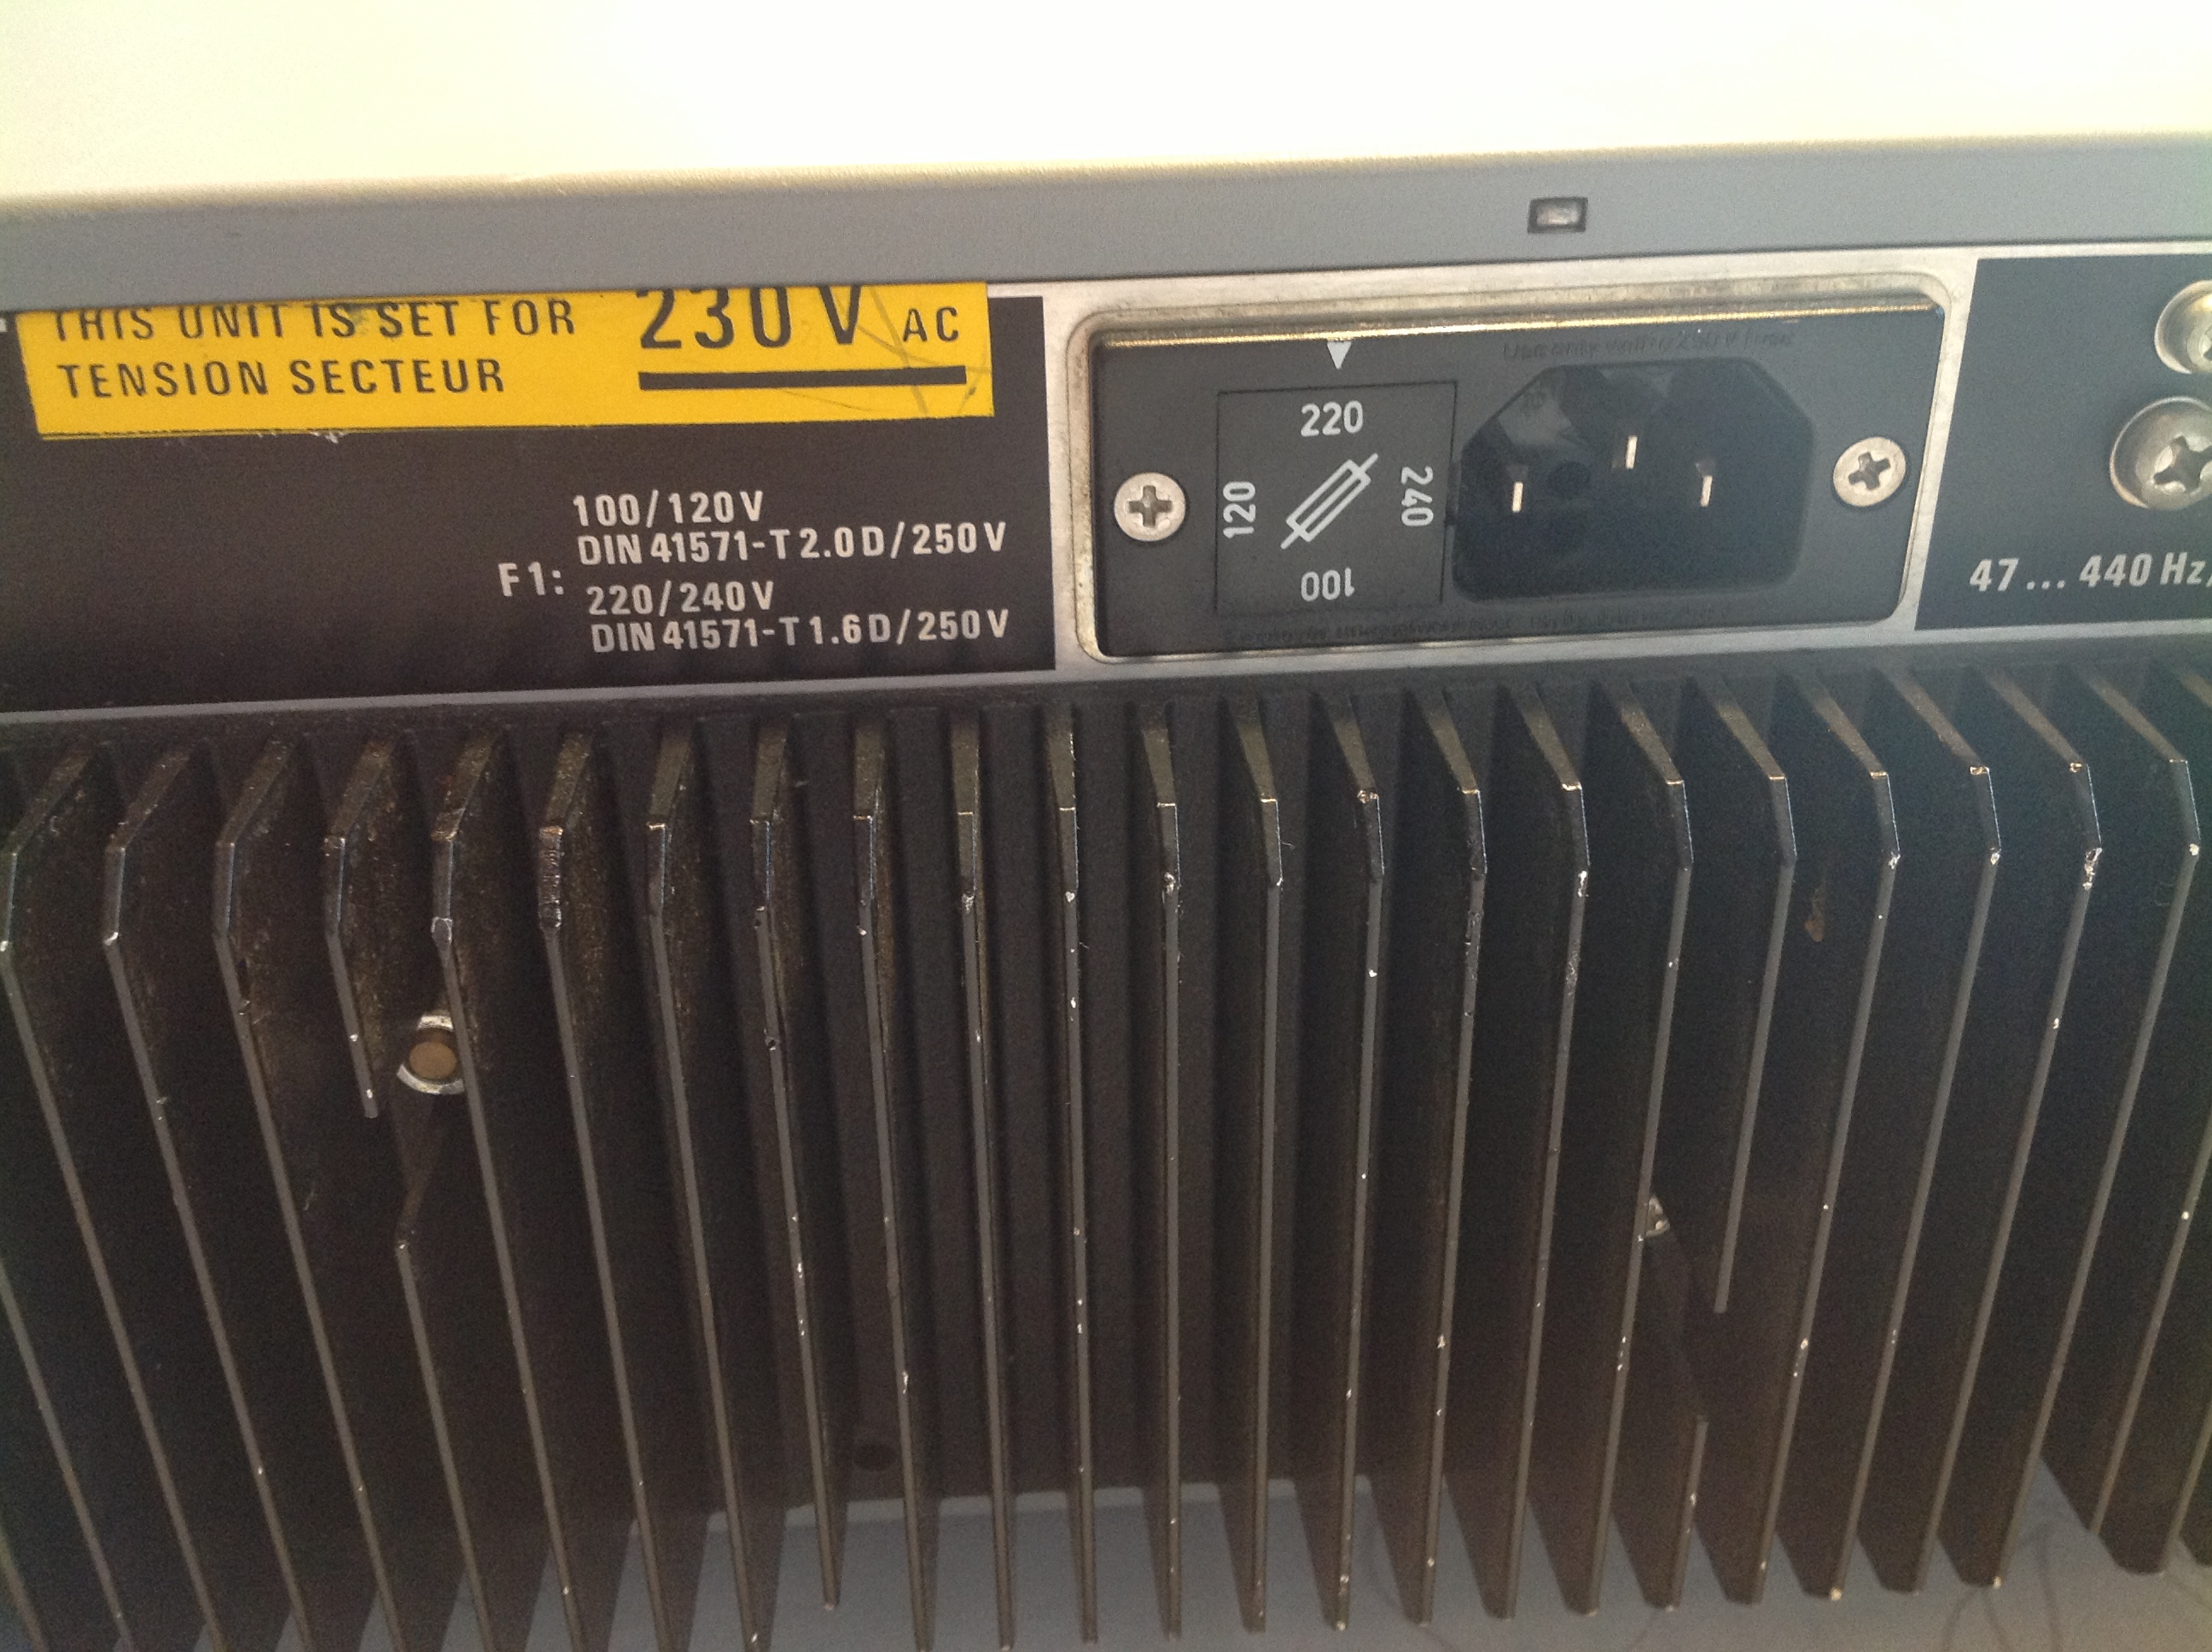 Rohde &amp; Schwarz Signal Generator SMH